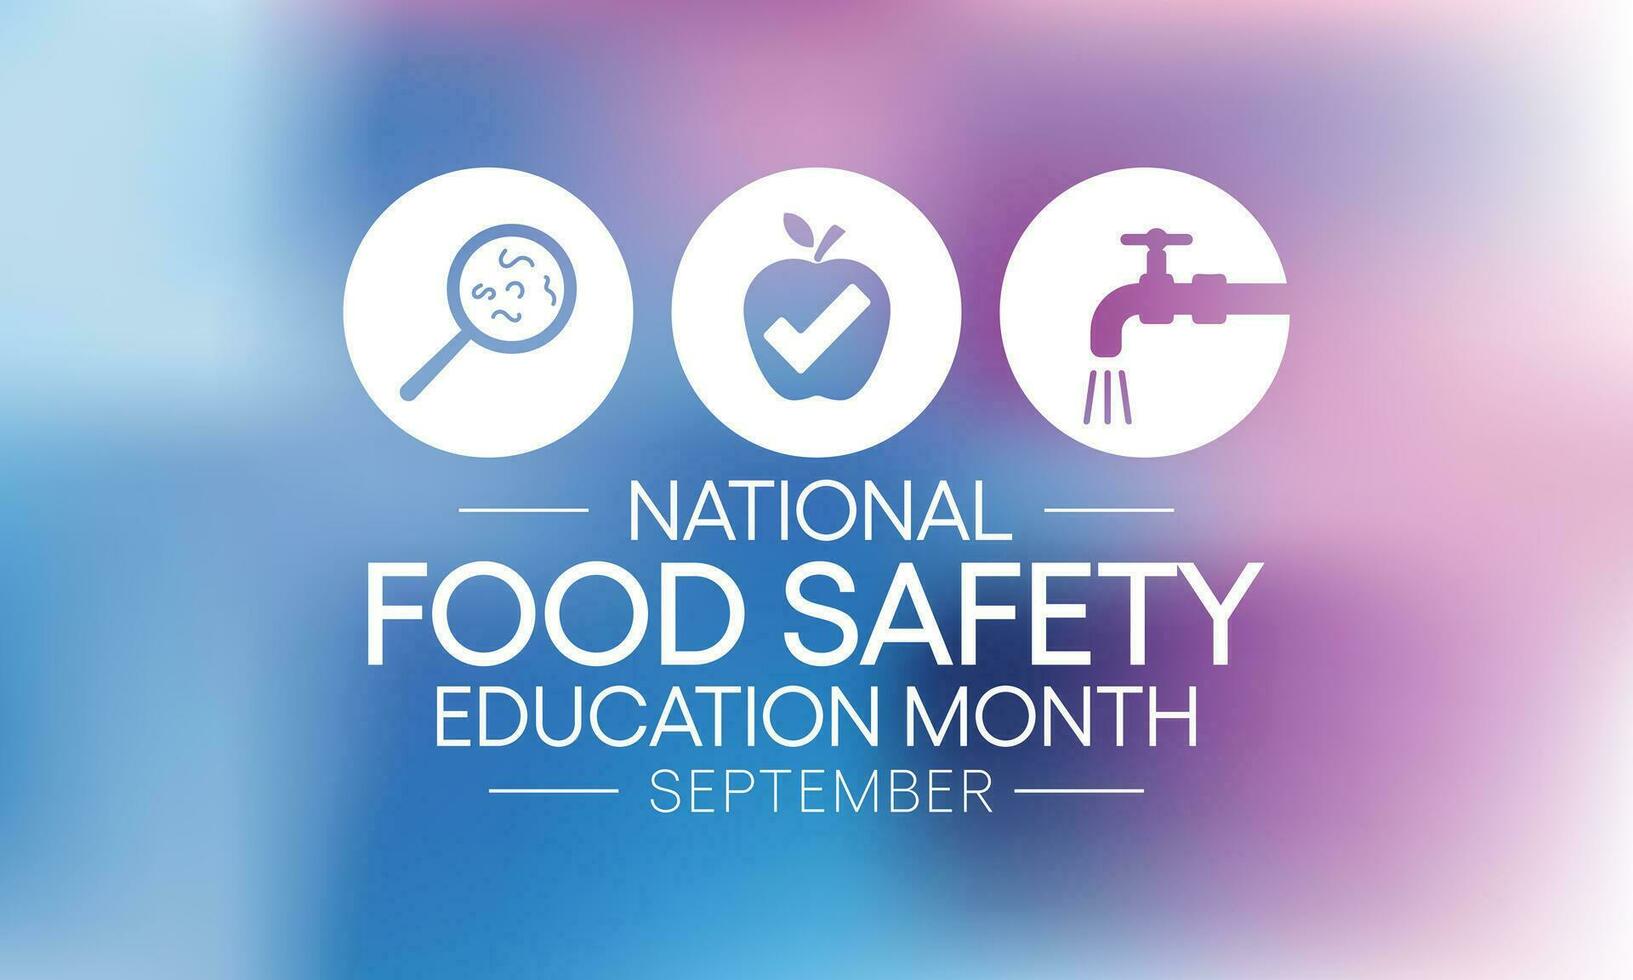 National Food safety education month observed each during September. Vector illustration